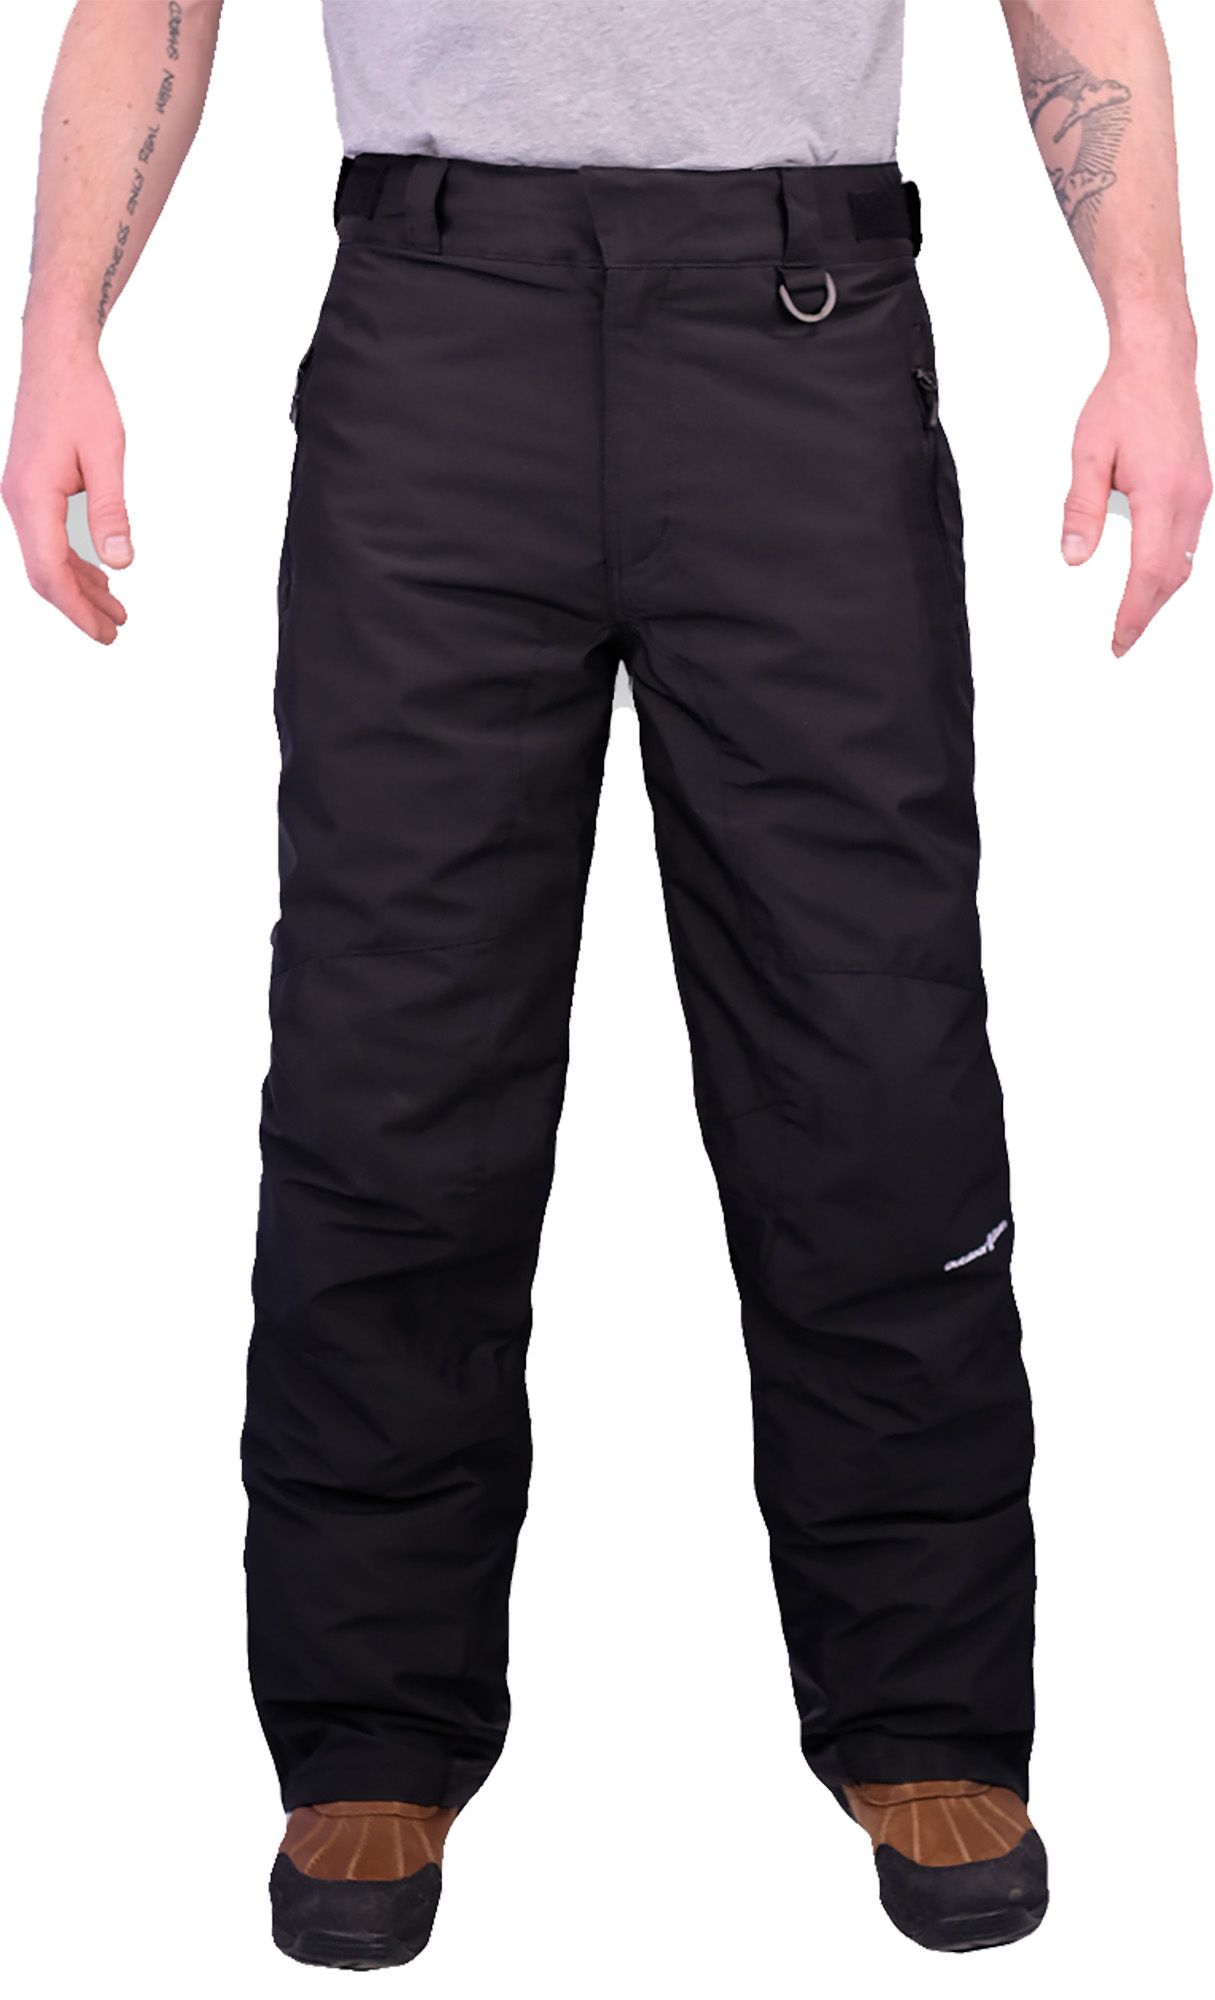 Photos - Ski Wear Outdoor Gear Men's Polar Pants, Large, Black | Father's Day Gift Idea 18OG